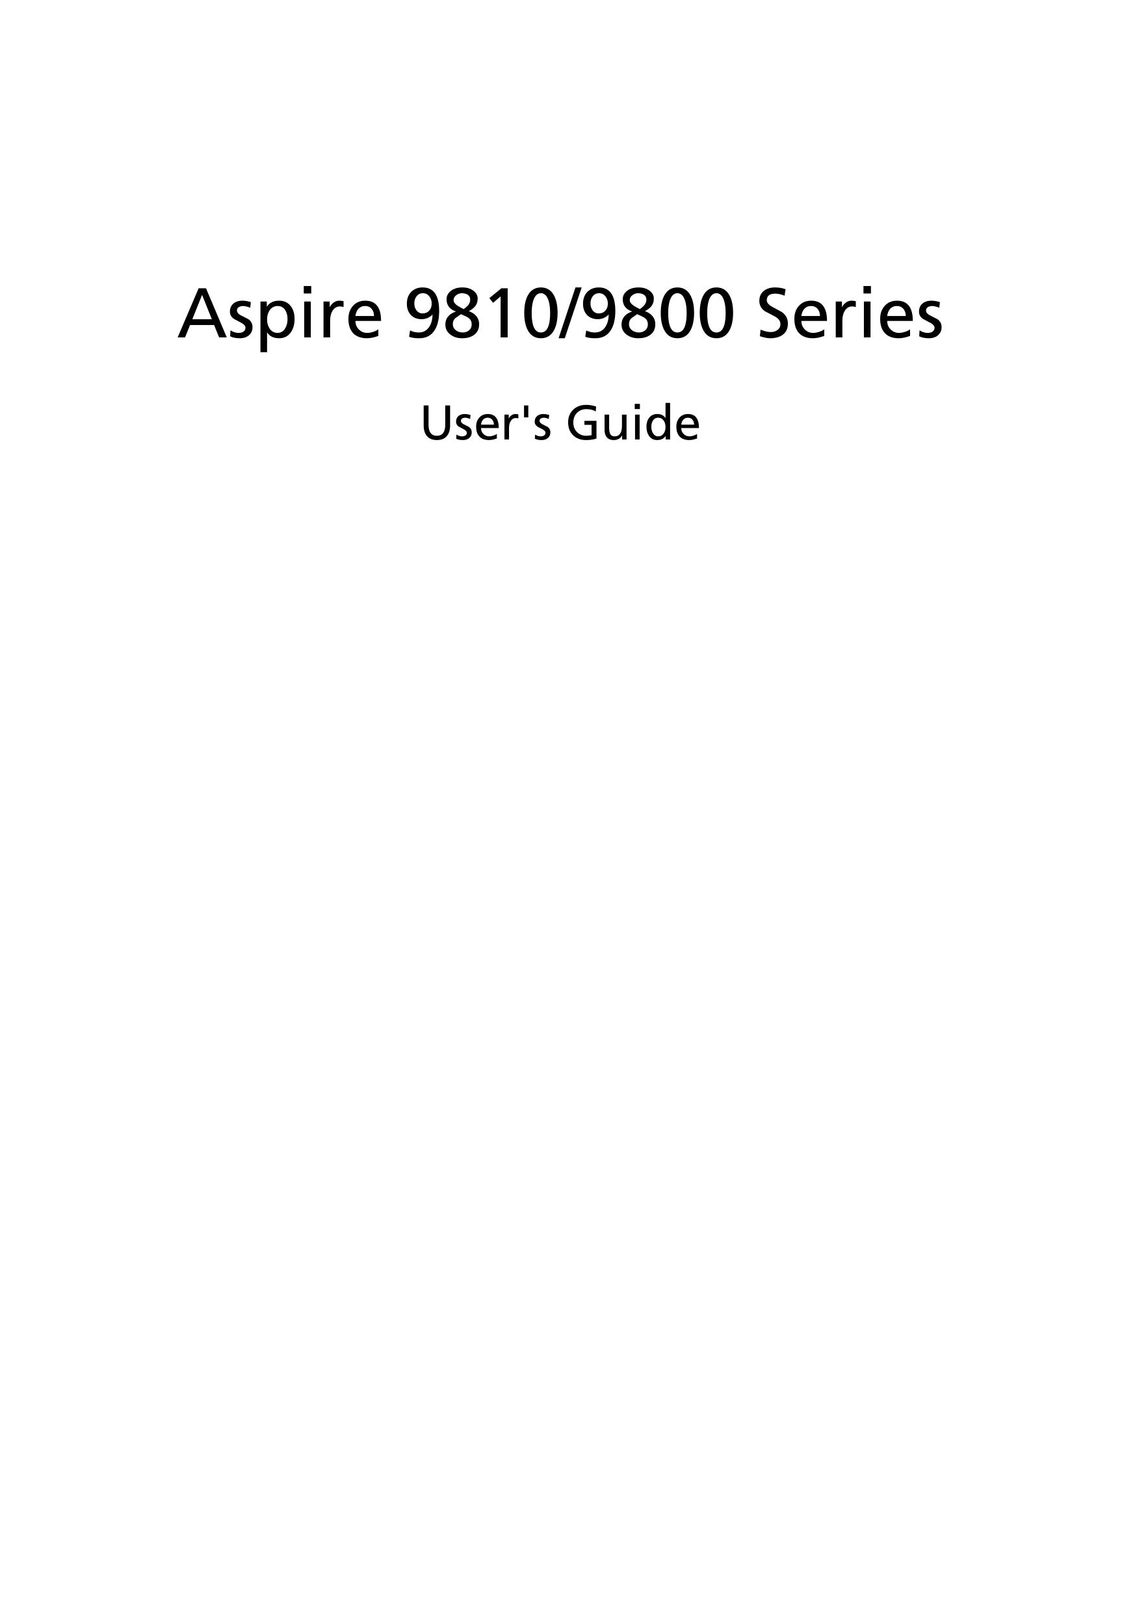 Aspire Digital 9800 Car Stereo System User Manual